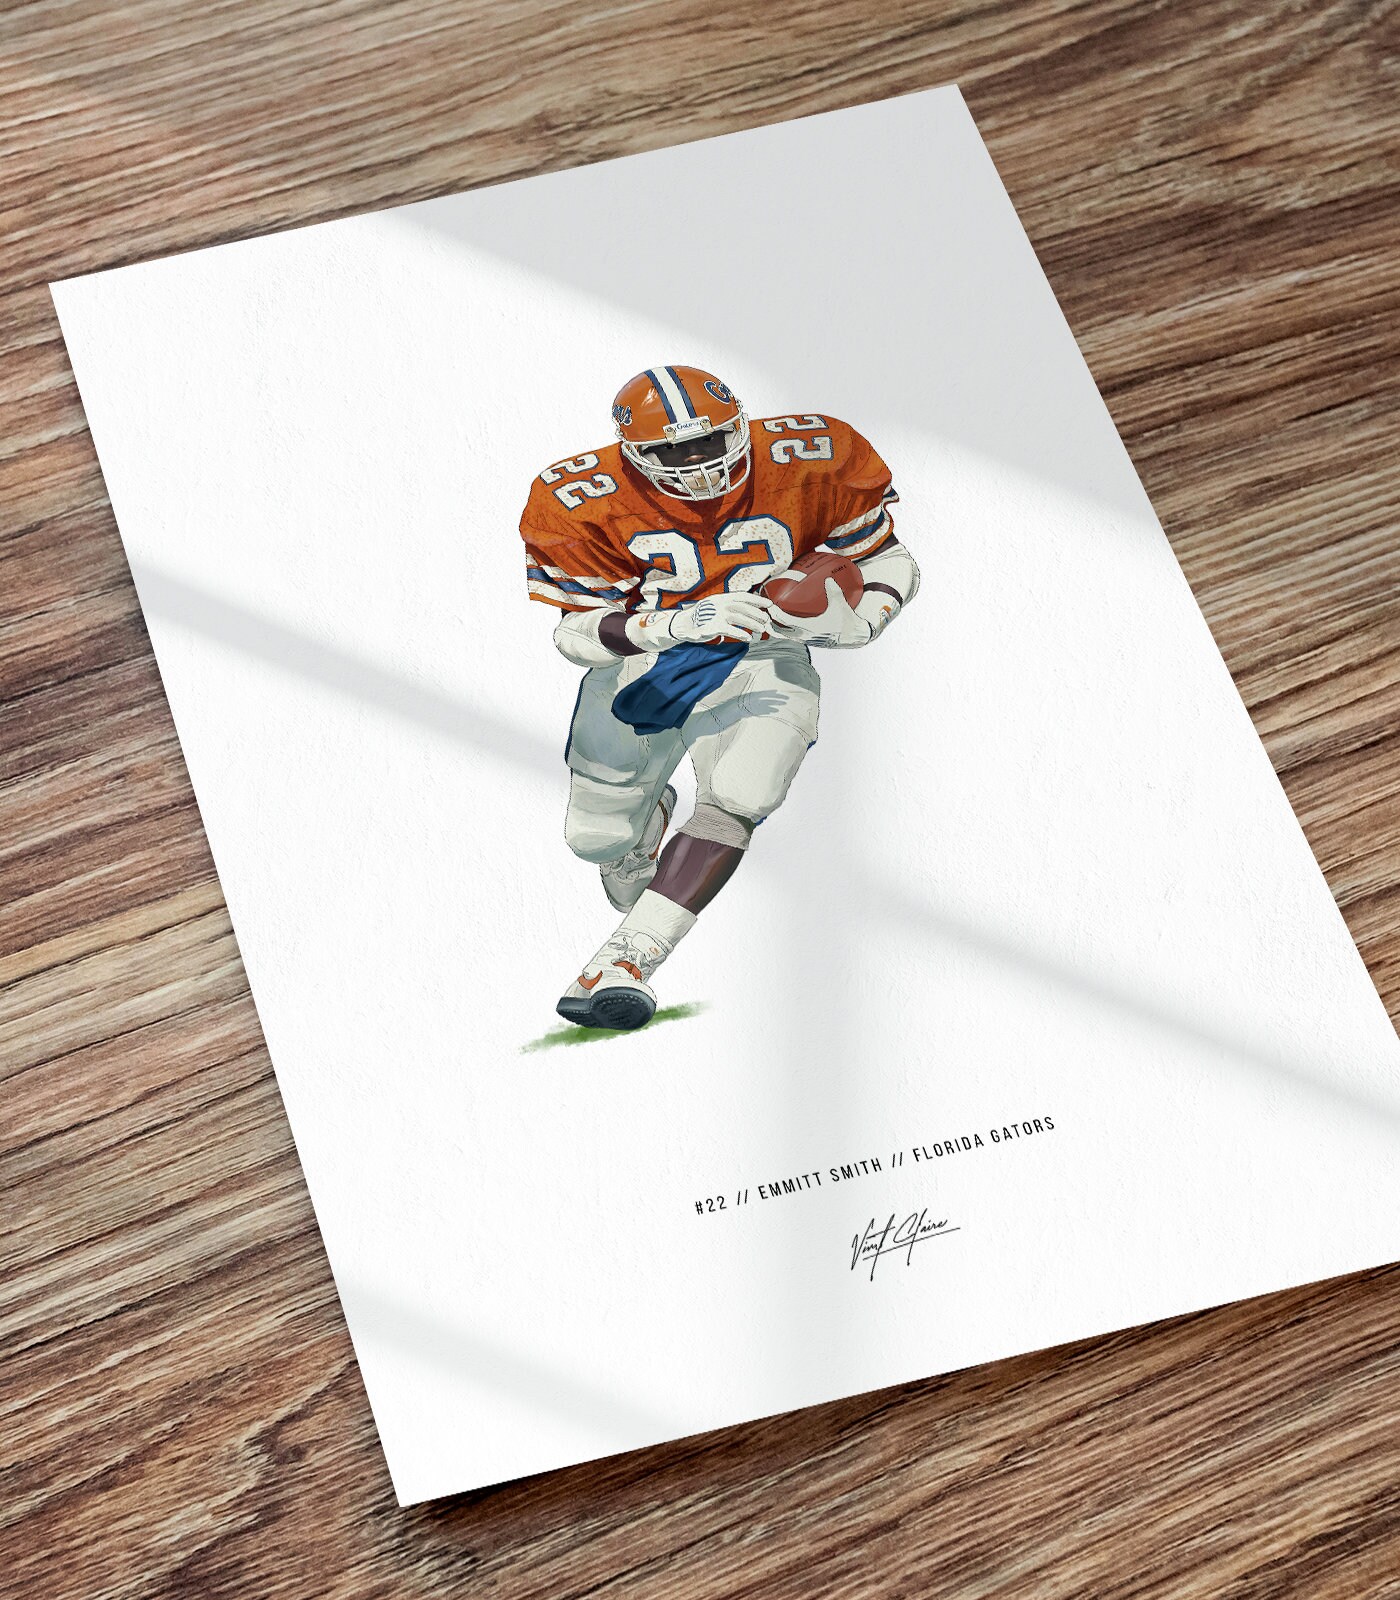 Emmitt Smith Football Illustrated Art Print Poster, Gift For Emmitt Smith Fans-1